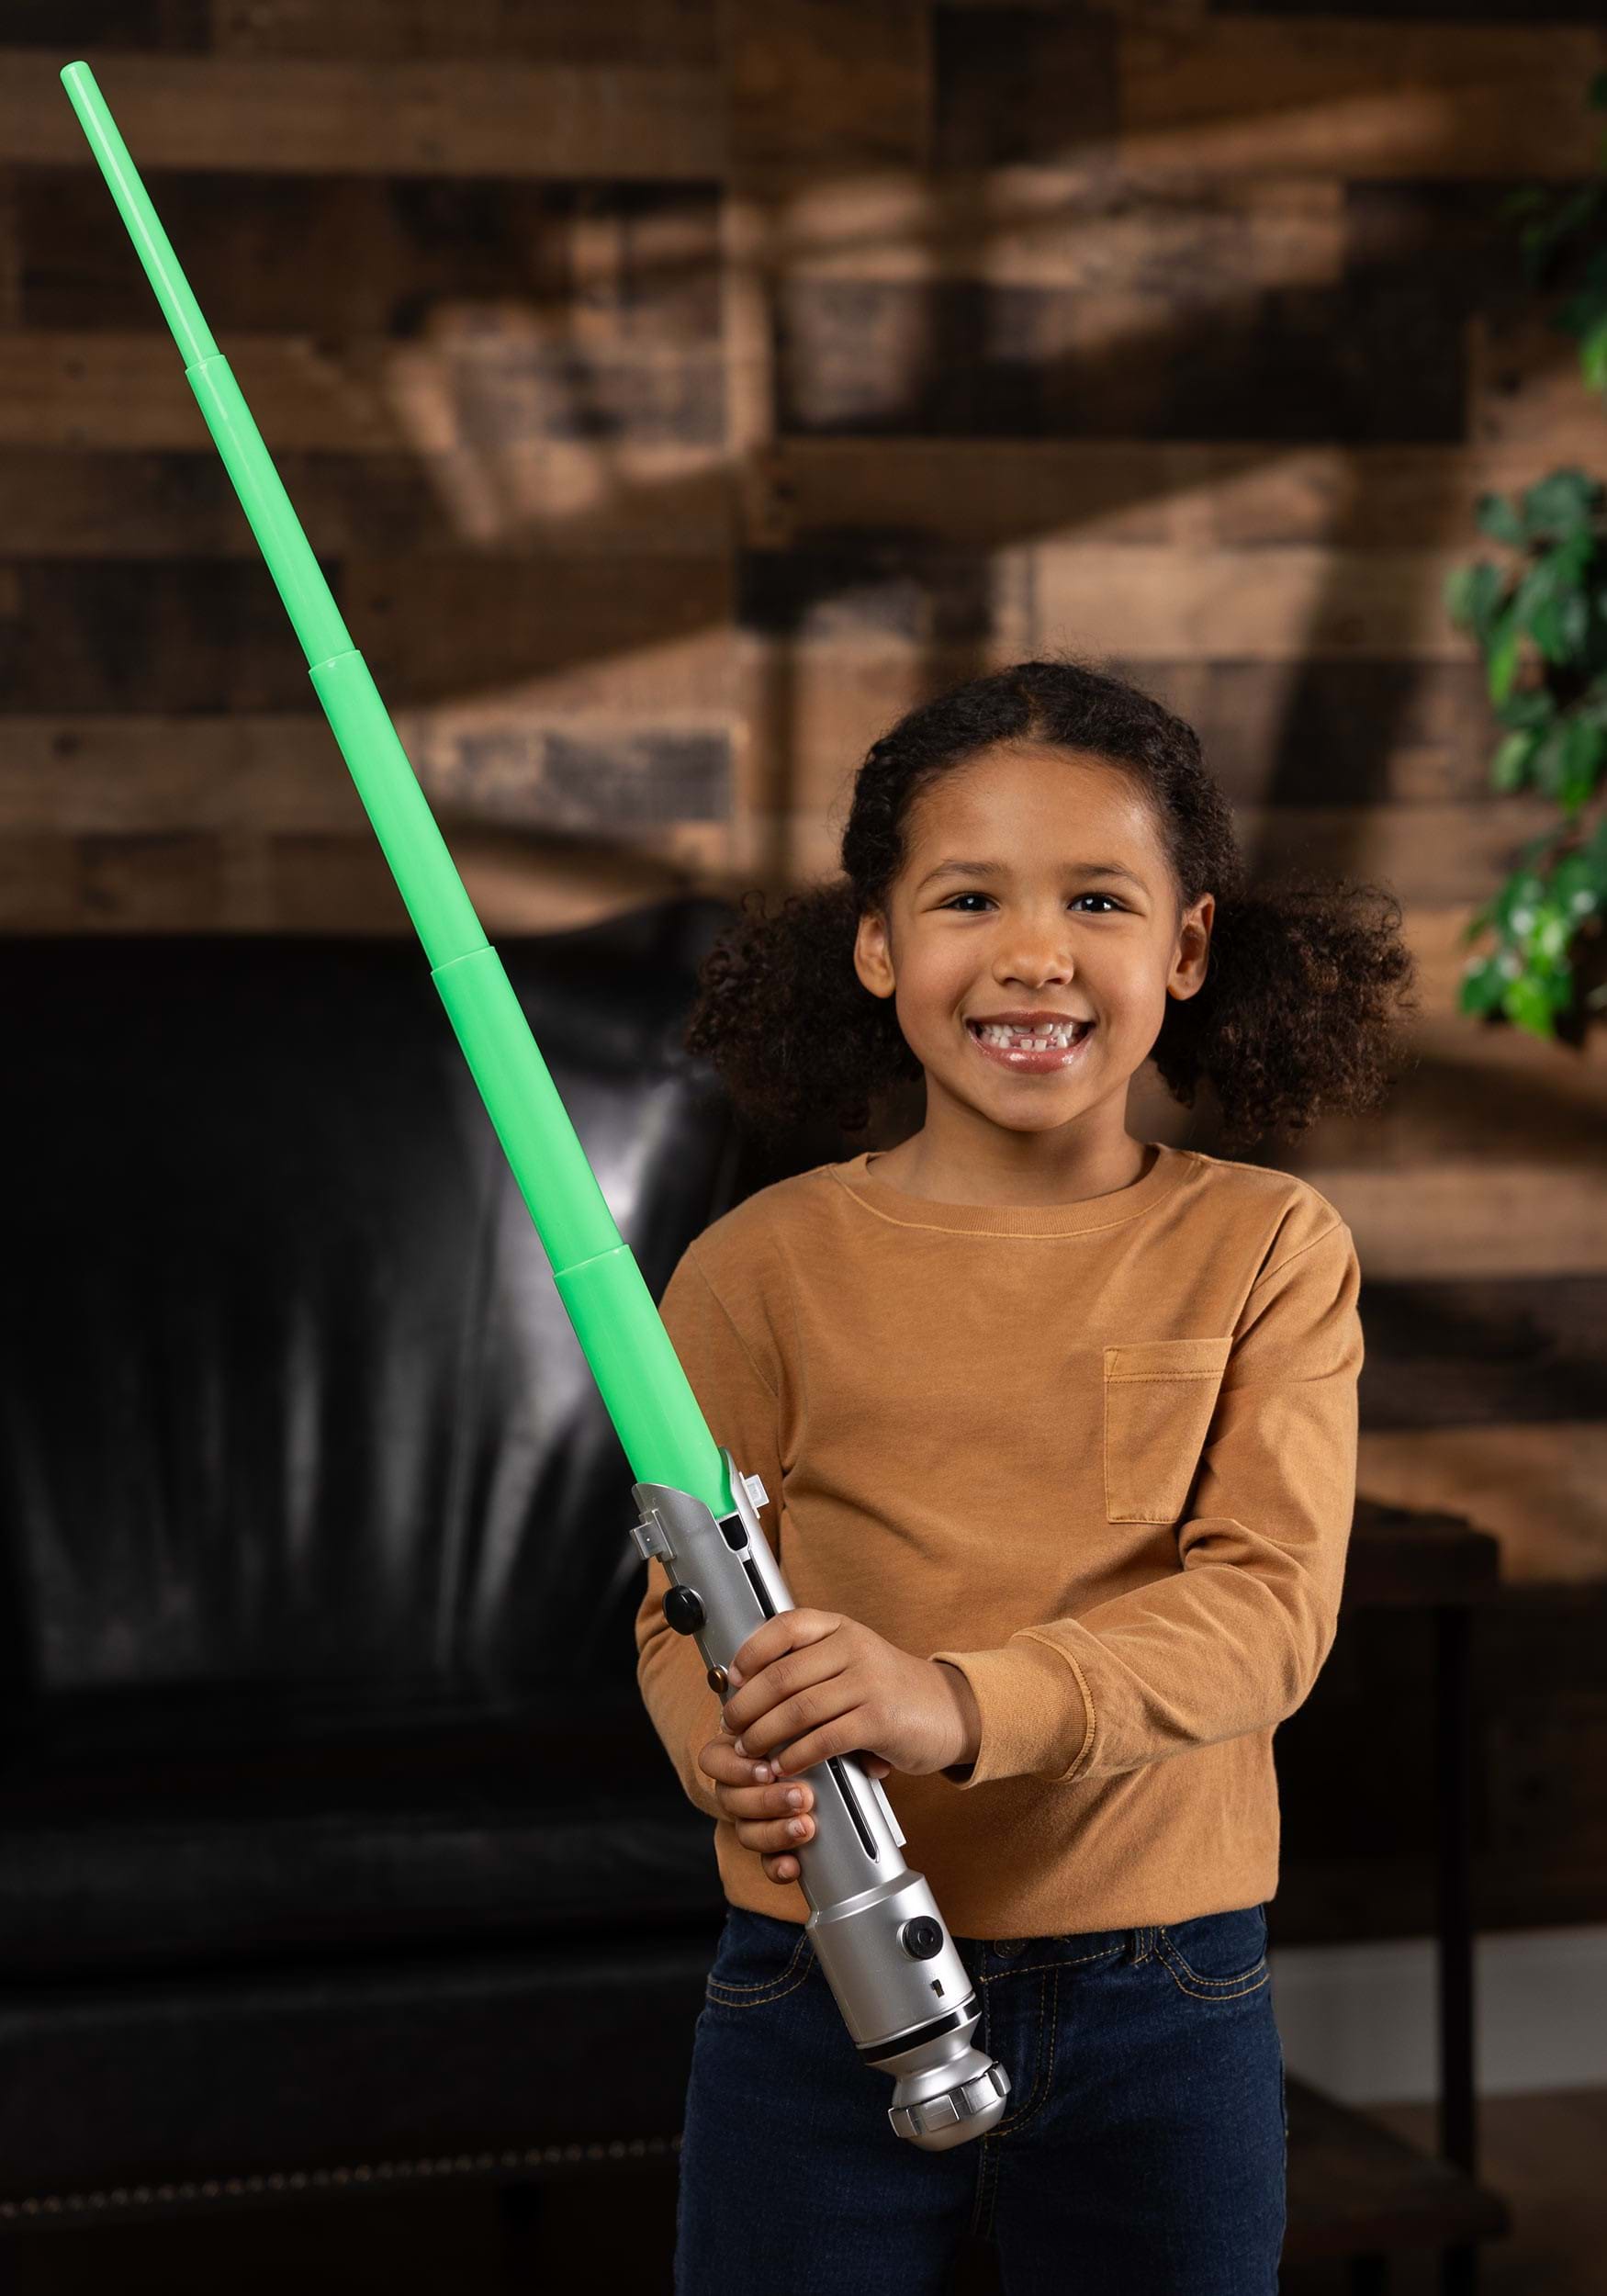 Ahsoka Tano Green Lightsaber Star Wars Halloween Costume Accessory Toy Weapon 